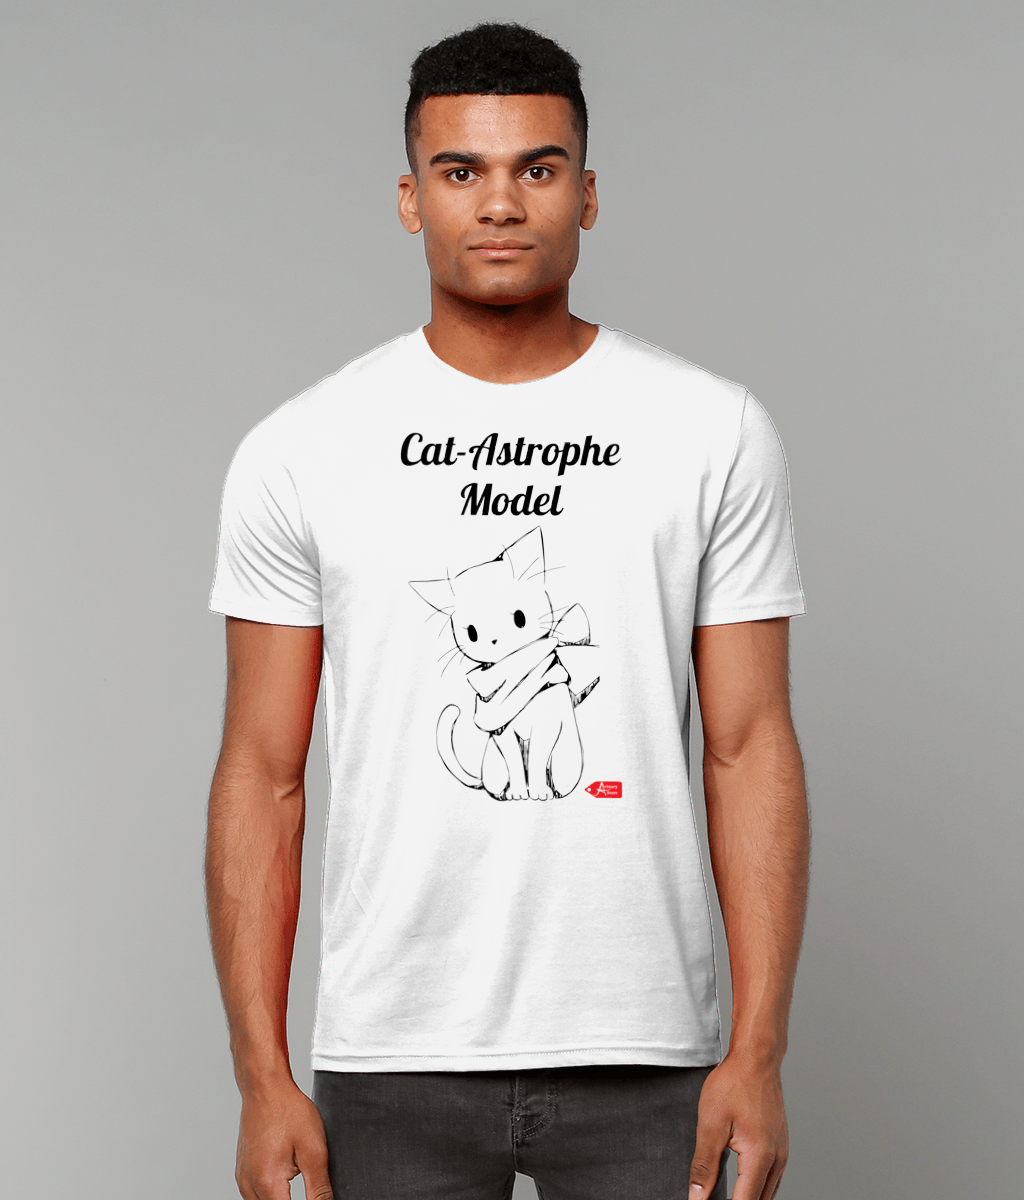 Cat-Astrophe Model Illustration T-shirt